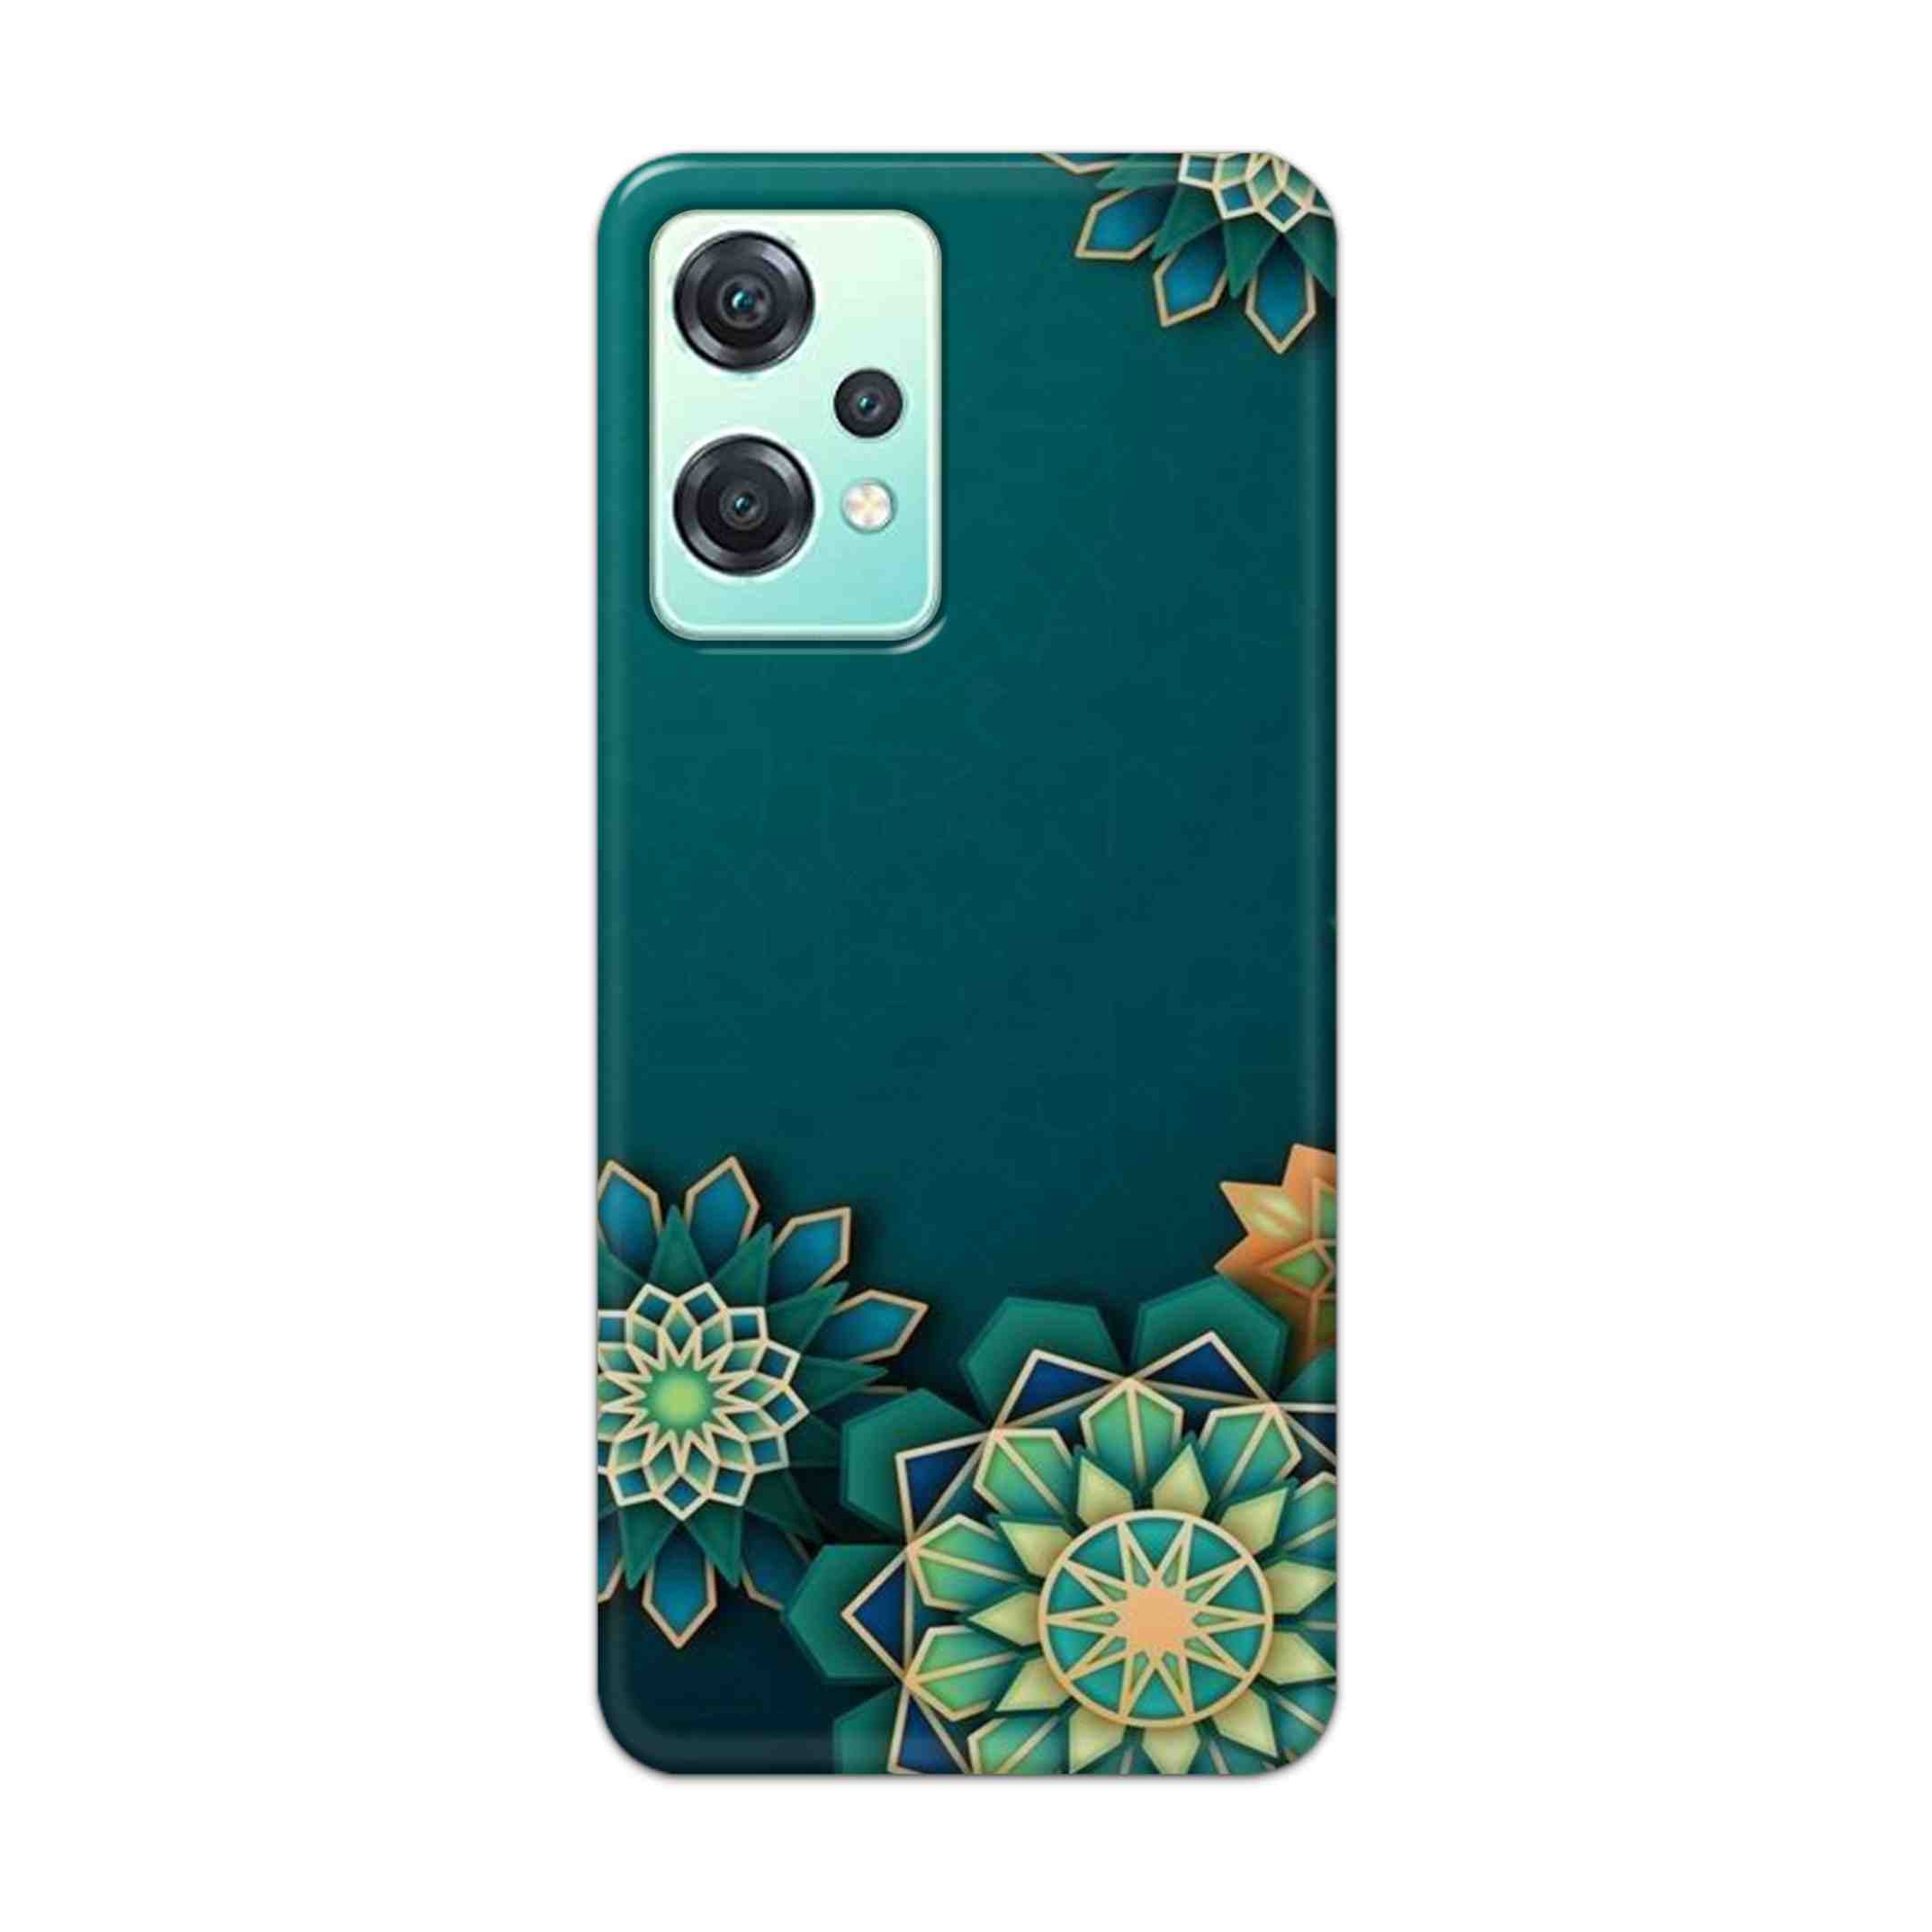 Buy Green Flower Hard Back Mobile Phone Case Cover For OnePlus Nord CE 2 Lite 5G Online